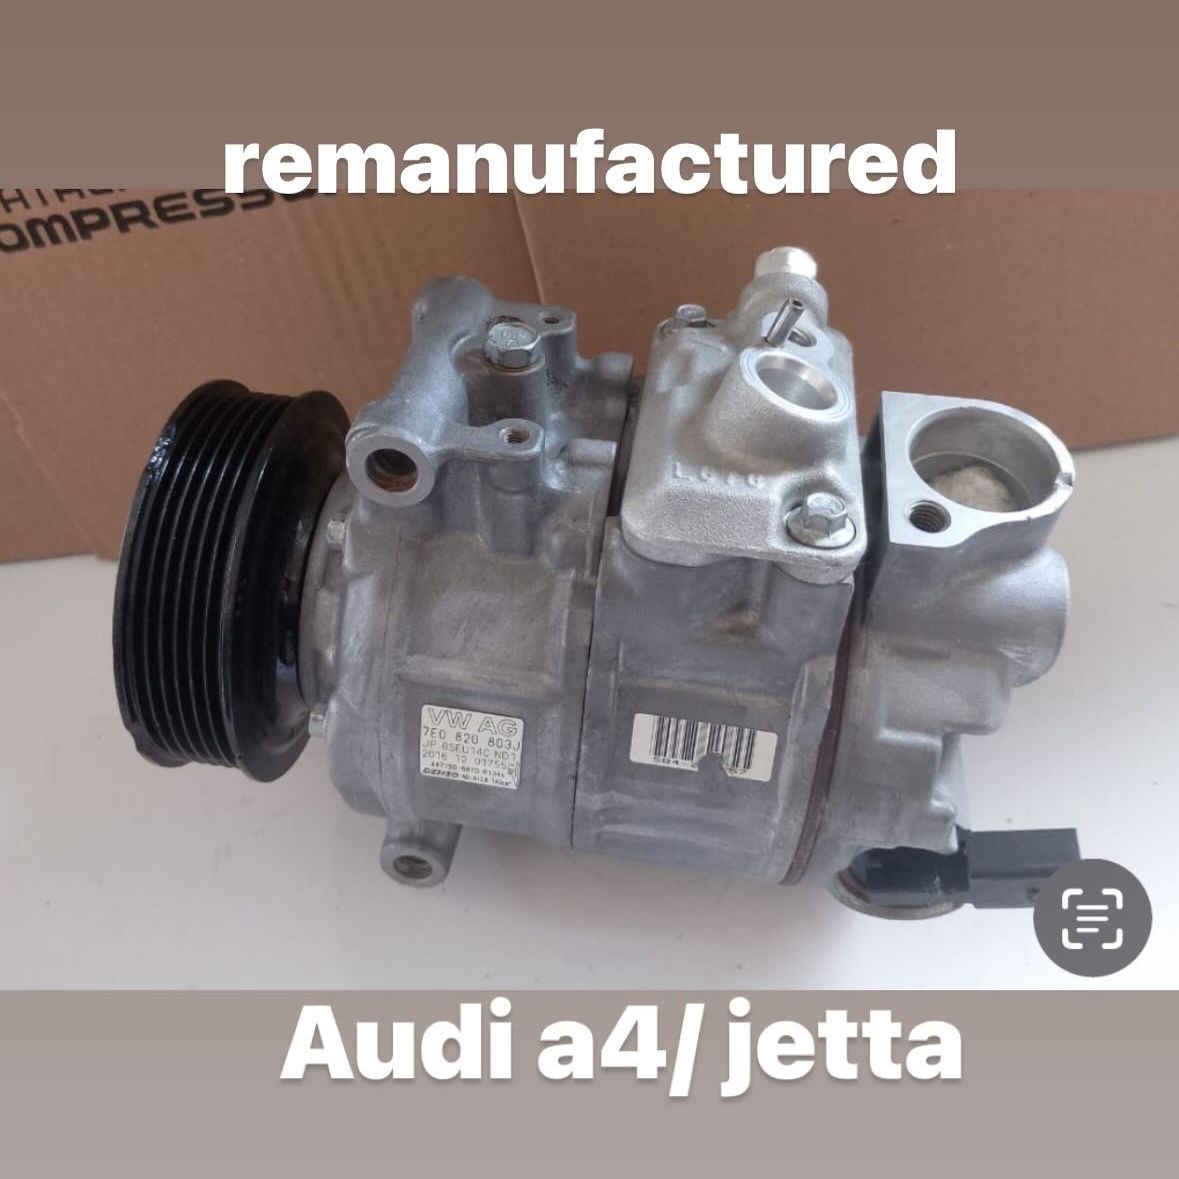 Compressor Audi A4/jetta Remanofactured 